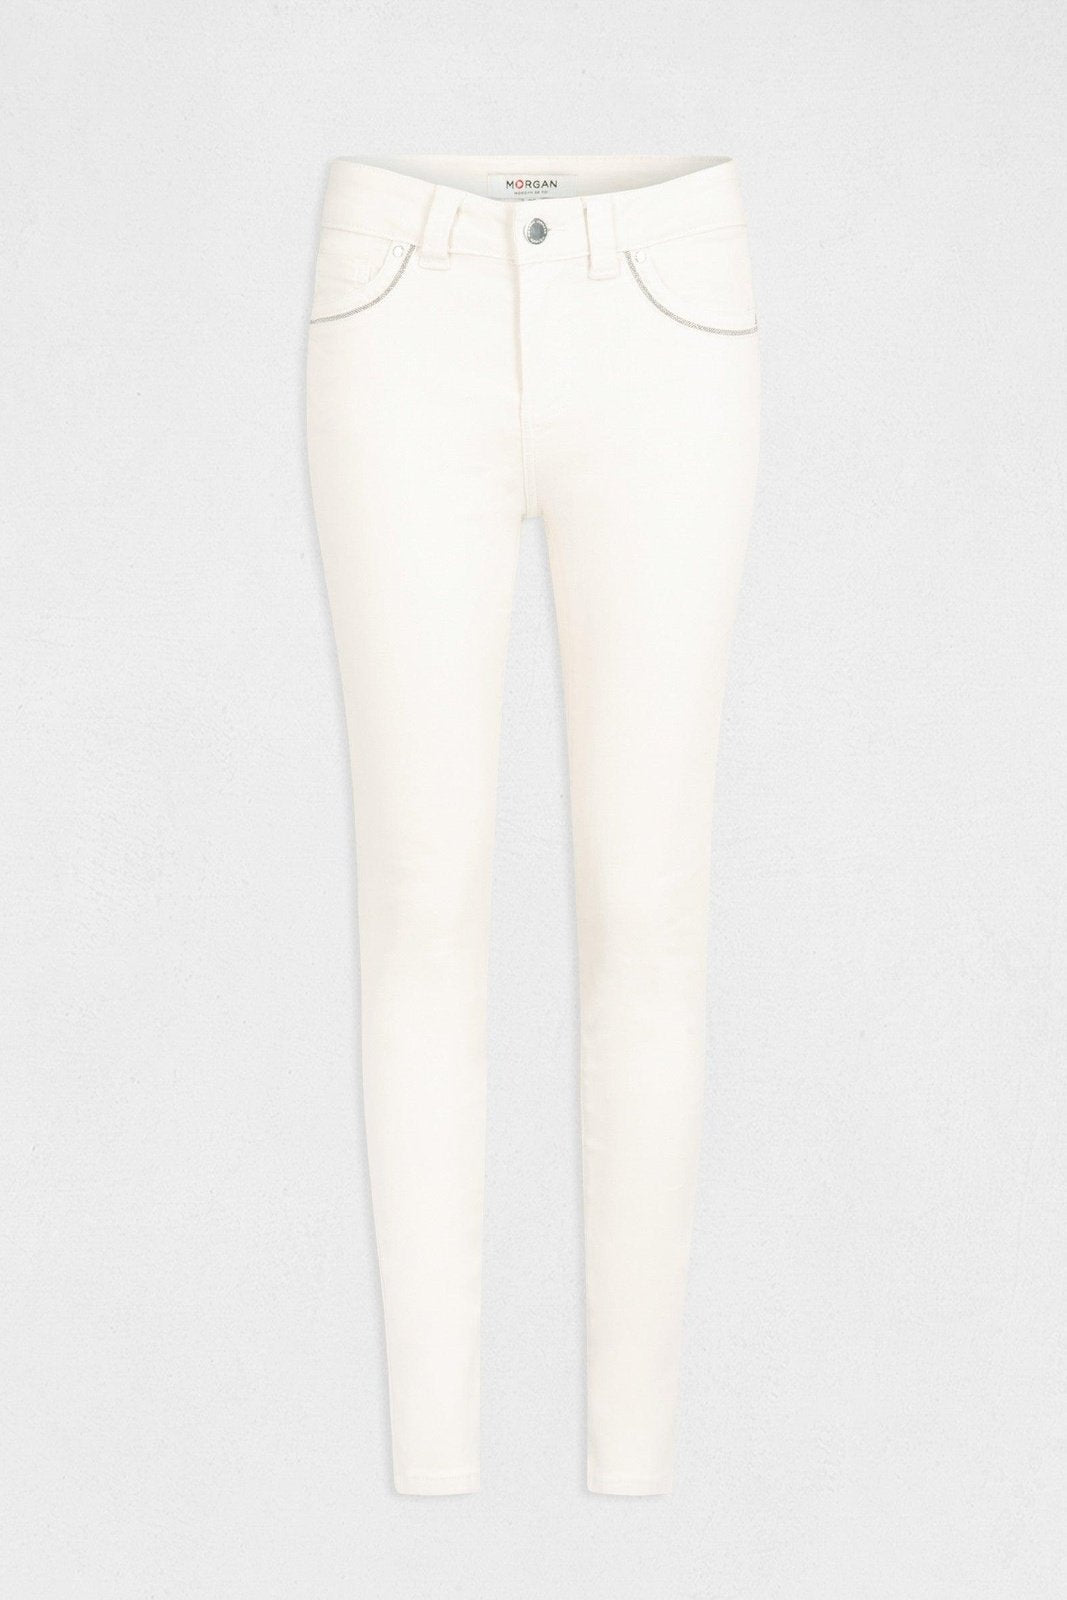 MORGAN - ג'ינס לנשים בצבע בז' - MASHBIR//365